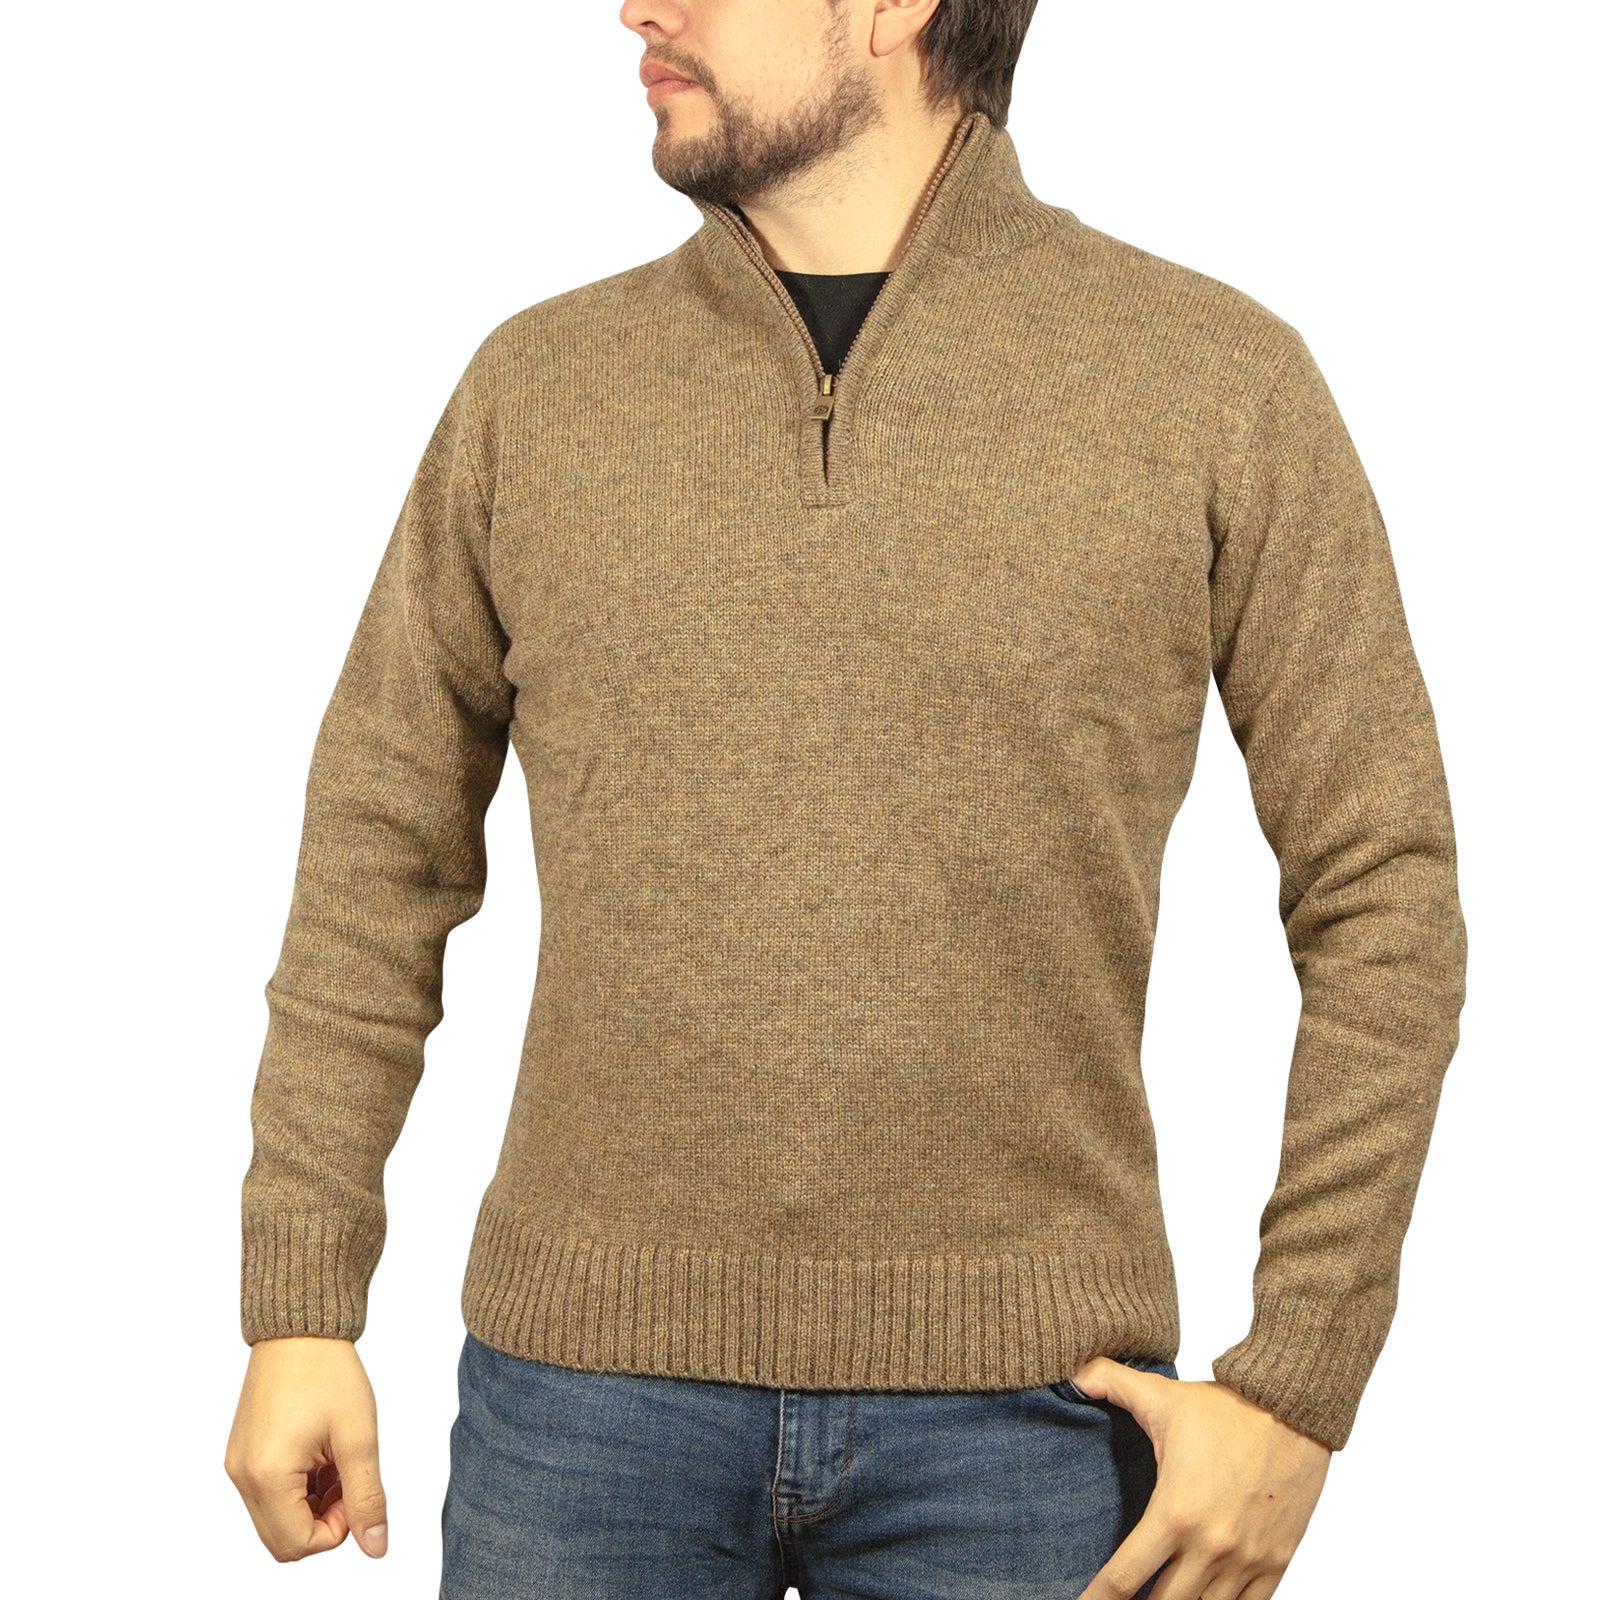 100% SHETLAND WOOL Half Zip Up Knit JUMPER Pullover Mens Sweater Knitted - Nutmeg (23) - M - 0